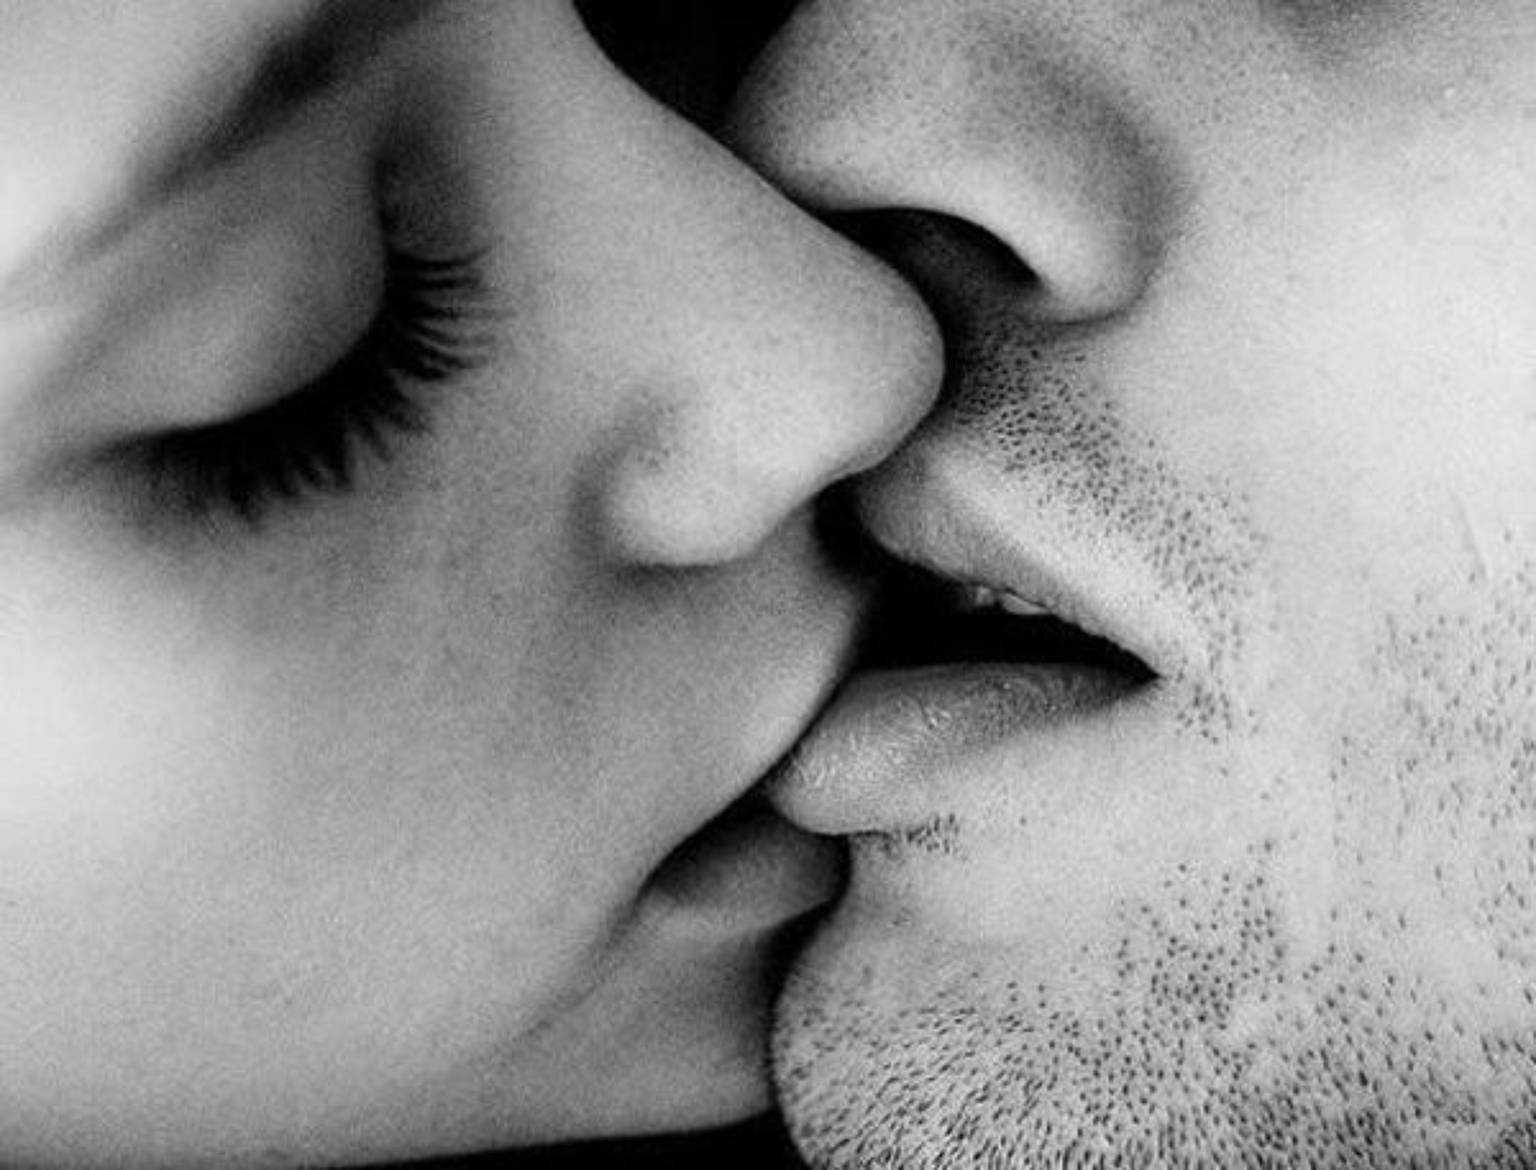 Escort kissing